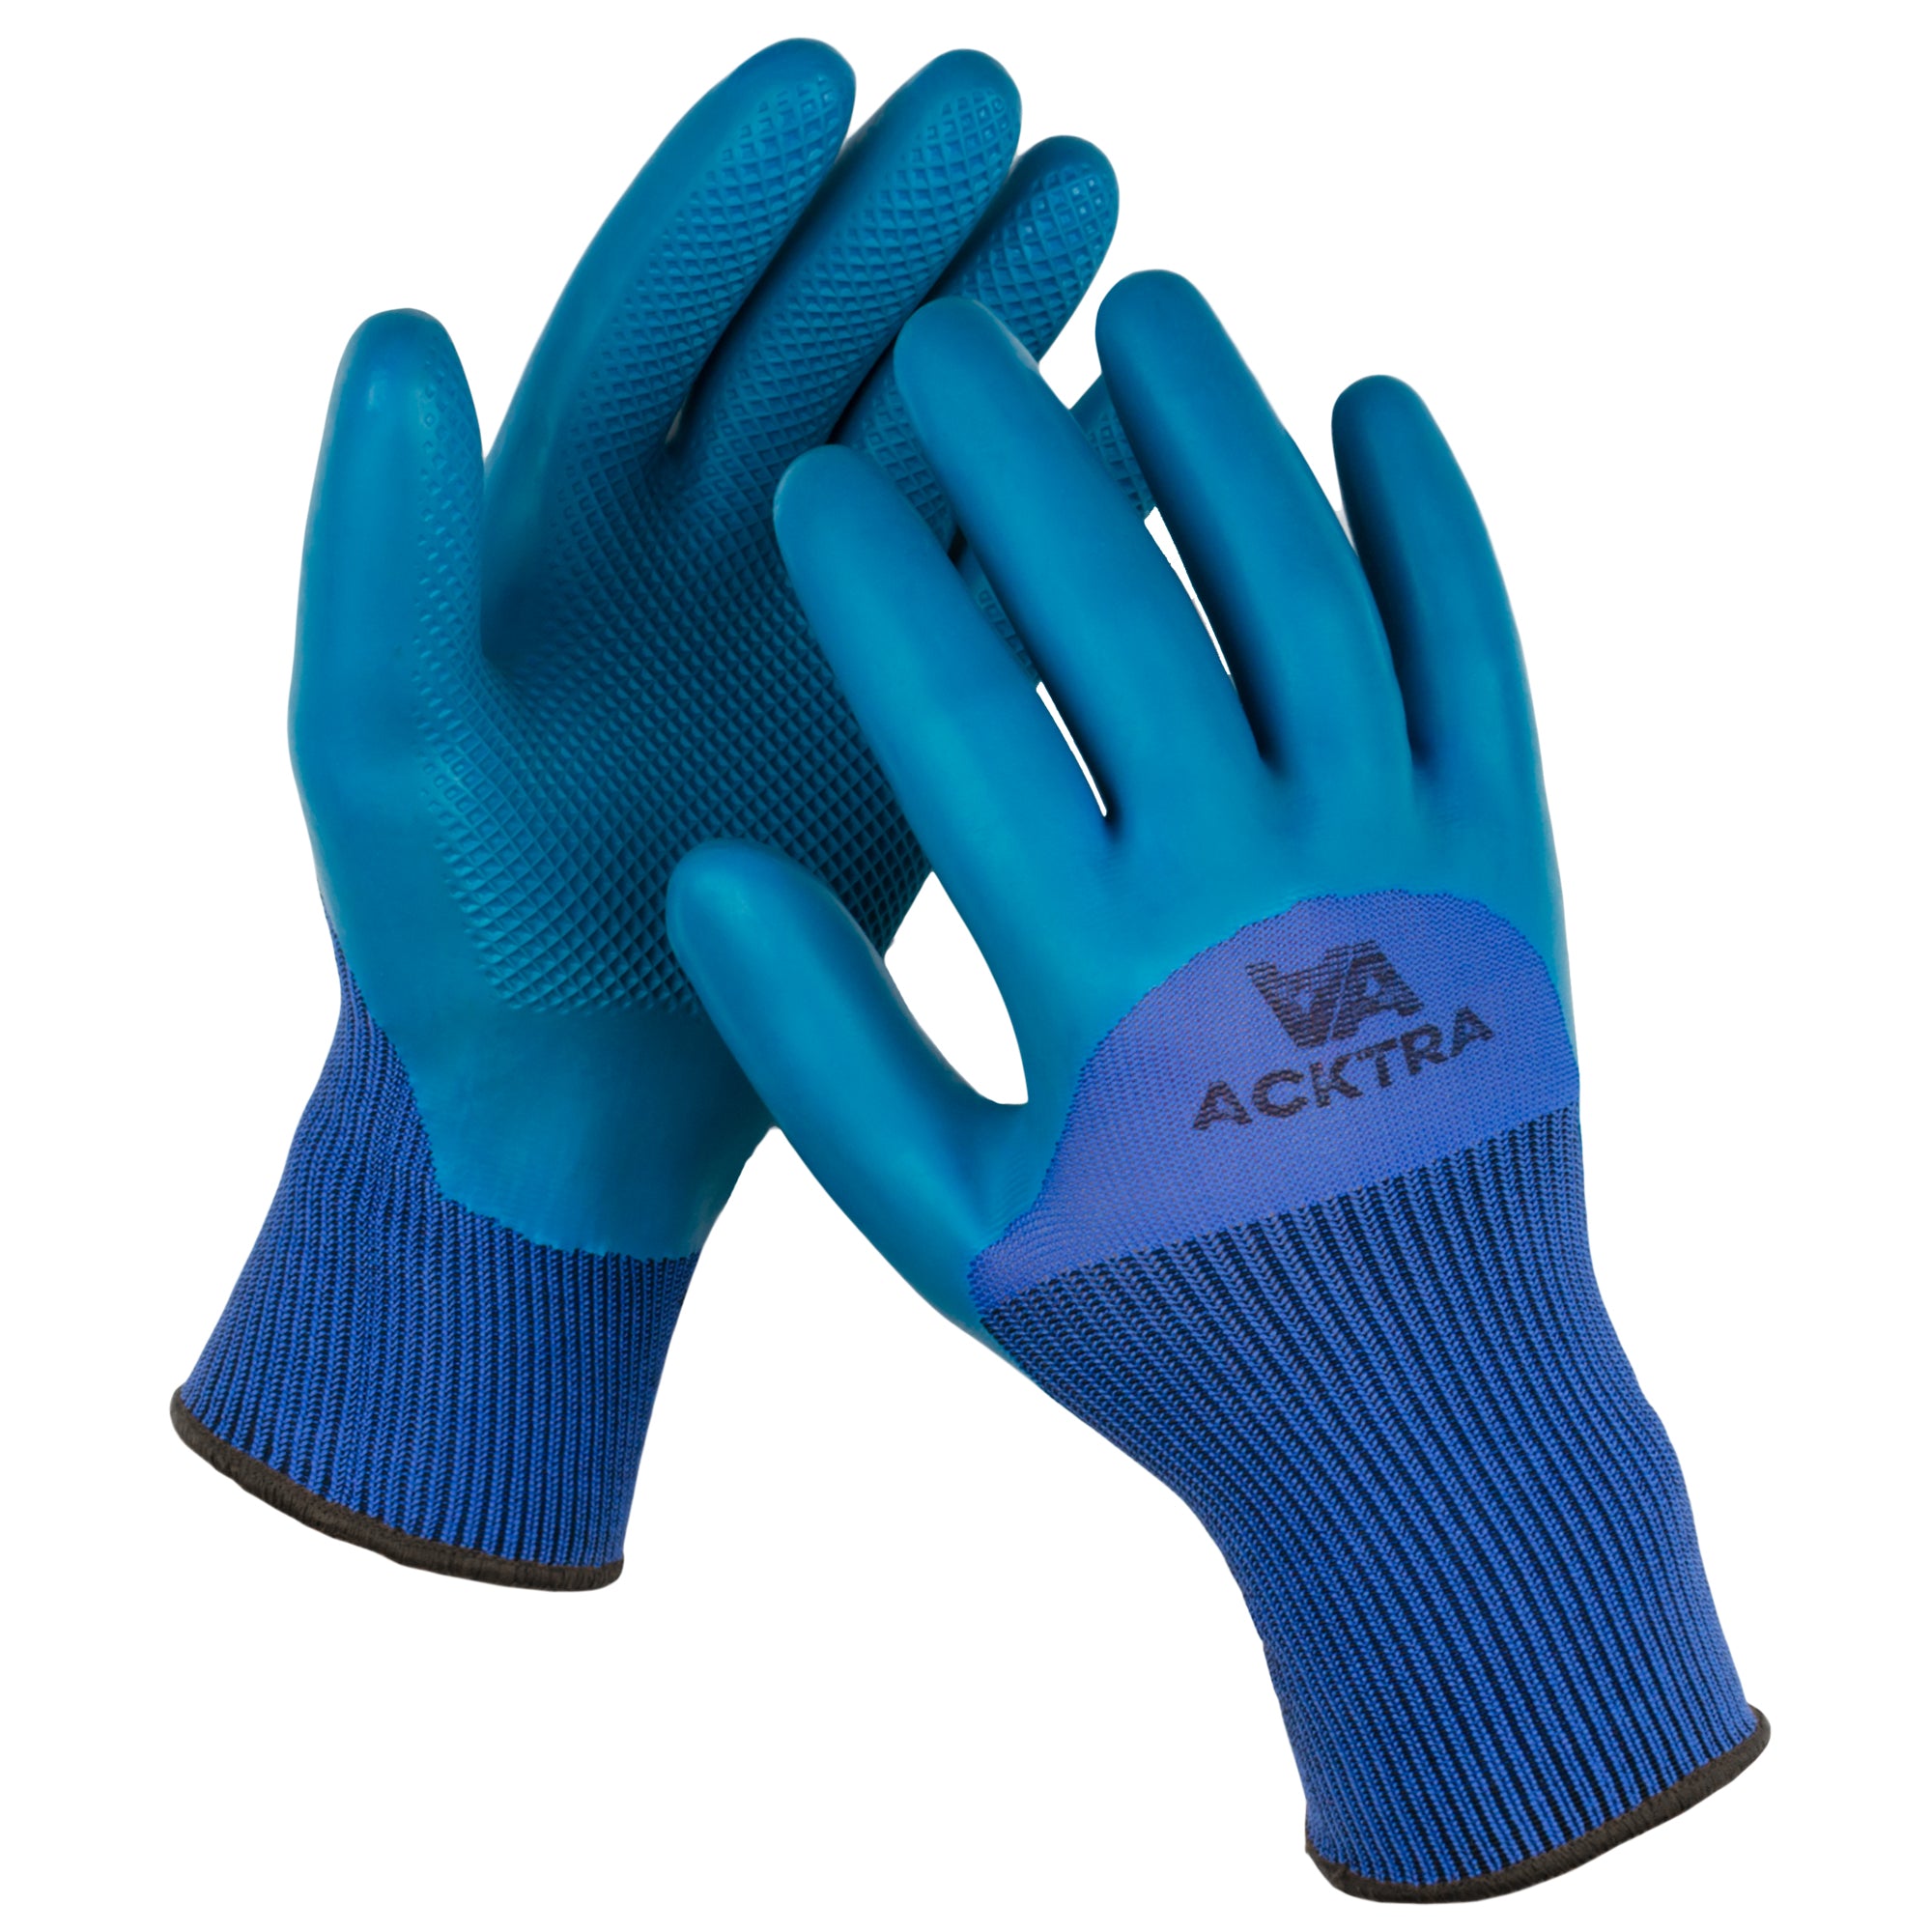 ACKTRA Safety WORK GLOVES 12 pairs, Seamless Blue Nylon Spandex